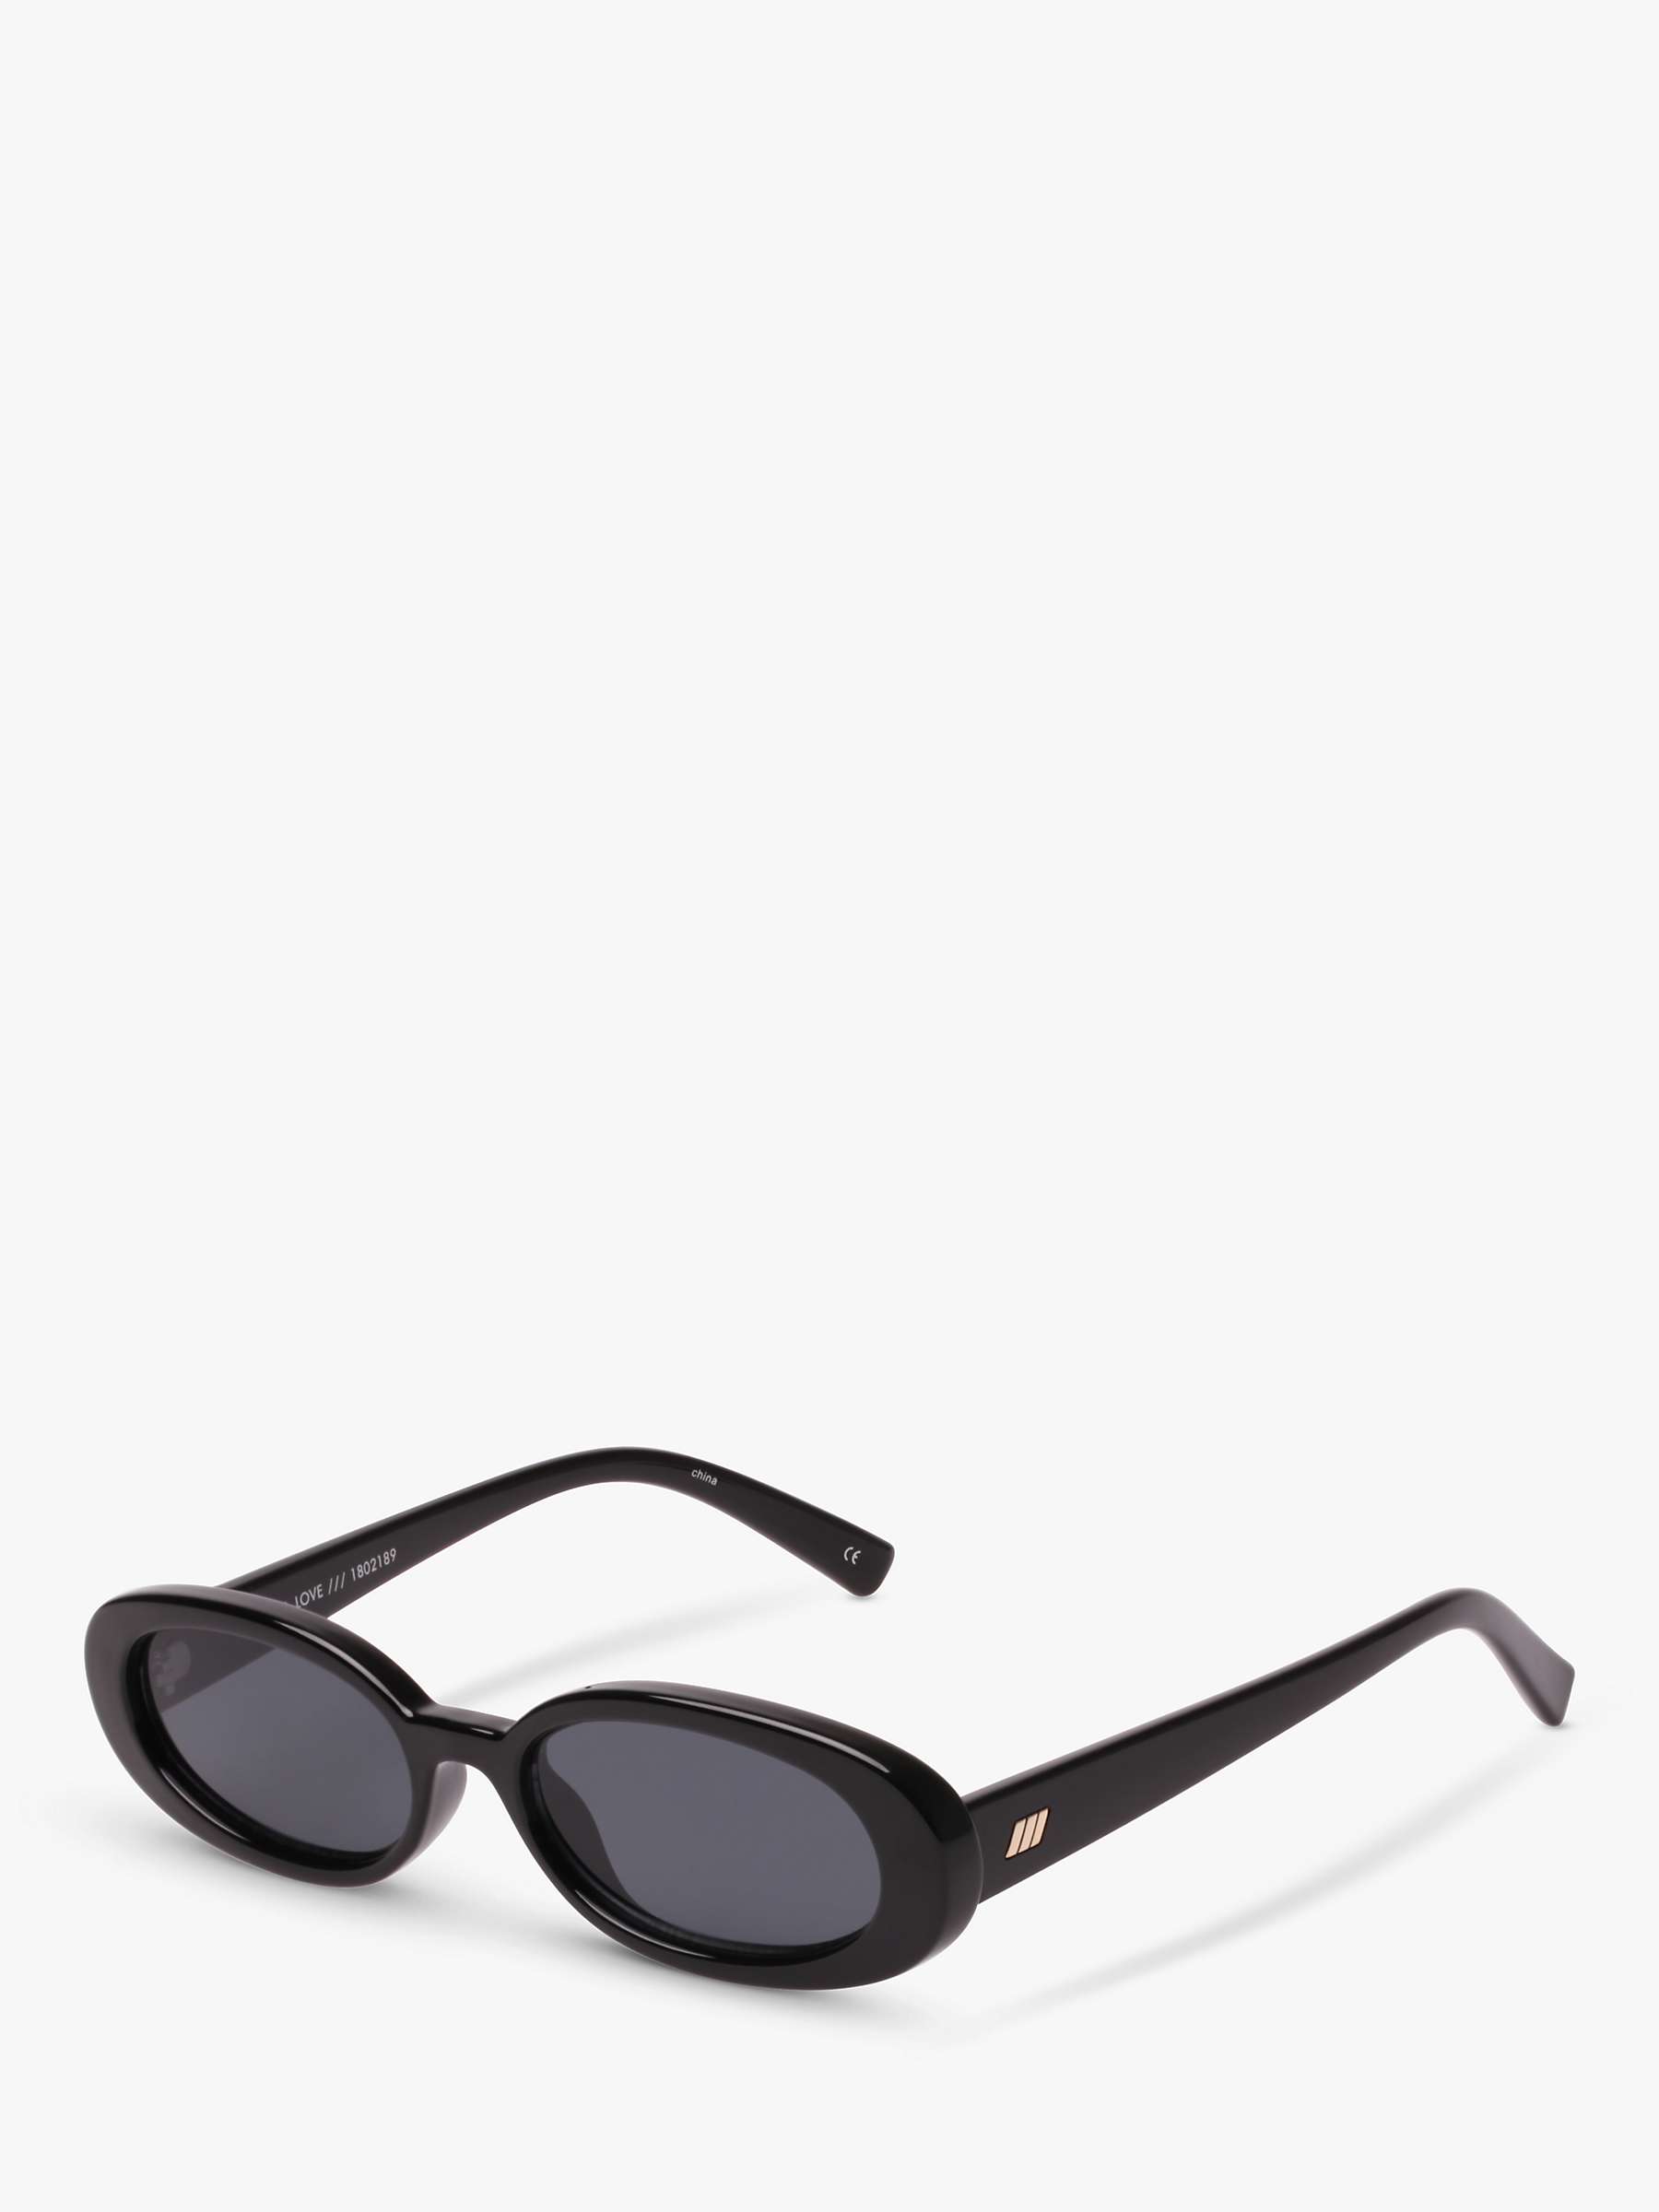 Buy Le Specs L5000163 Unisex Outta Love Oval Sunglasses, Black/Grey Online at johnlewis.com